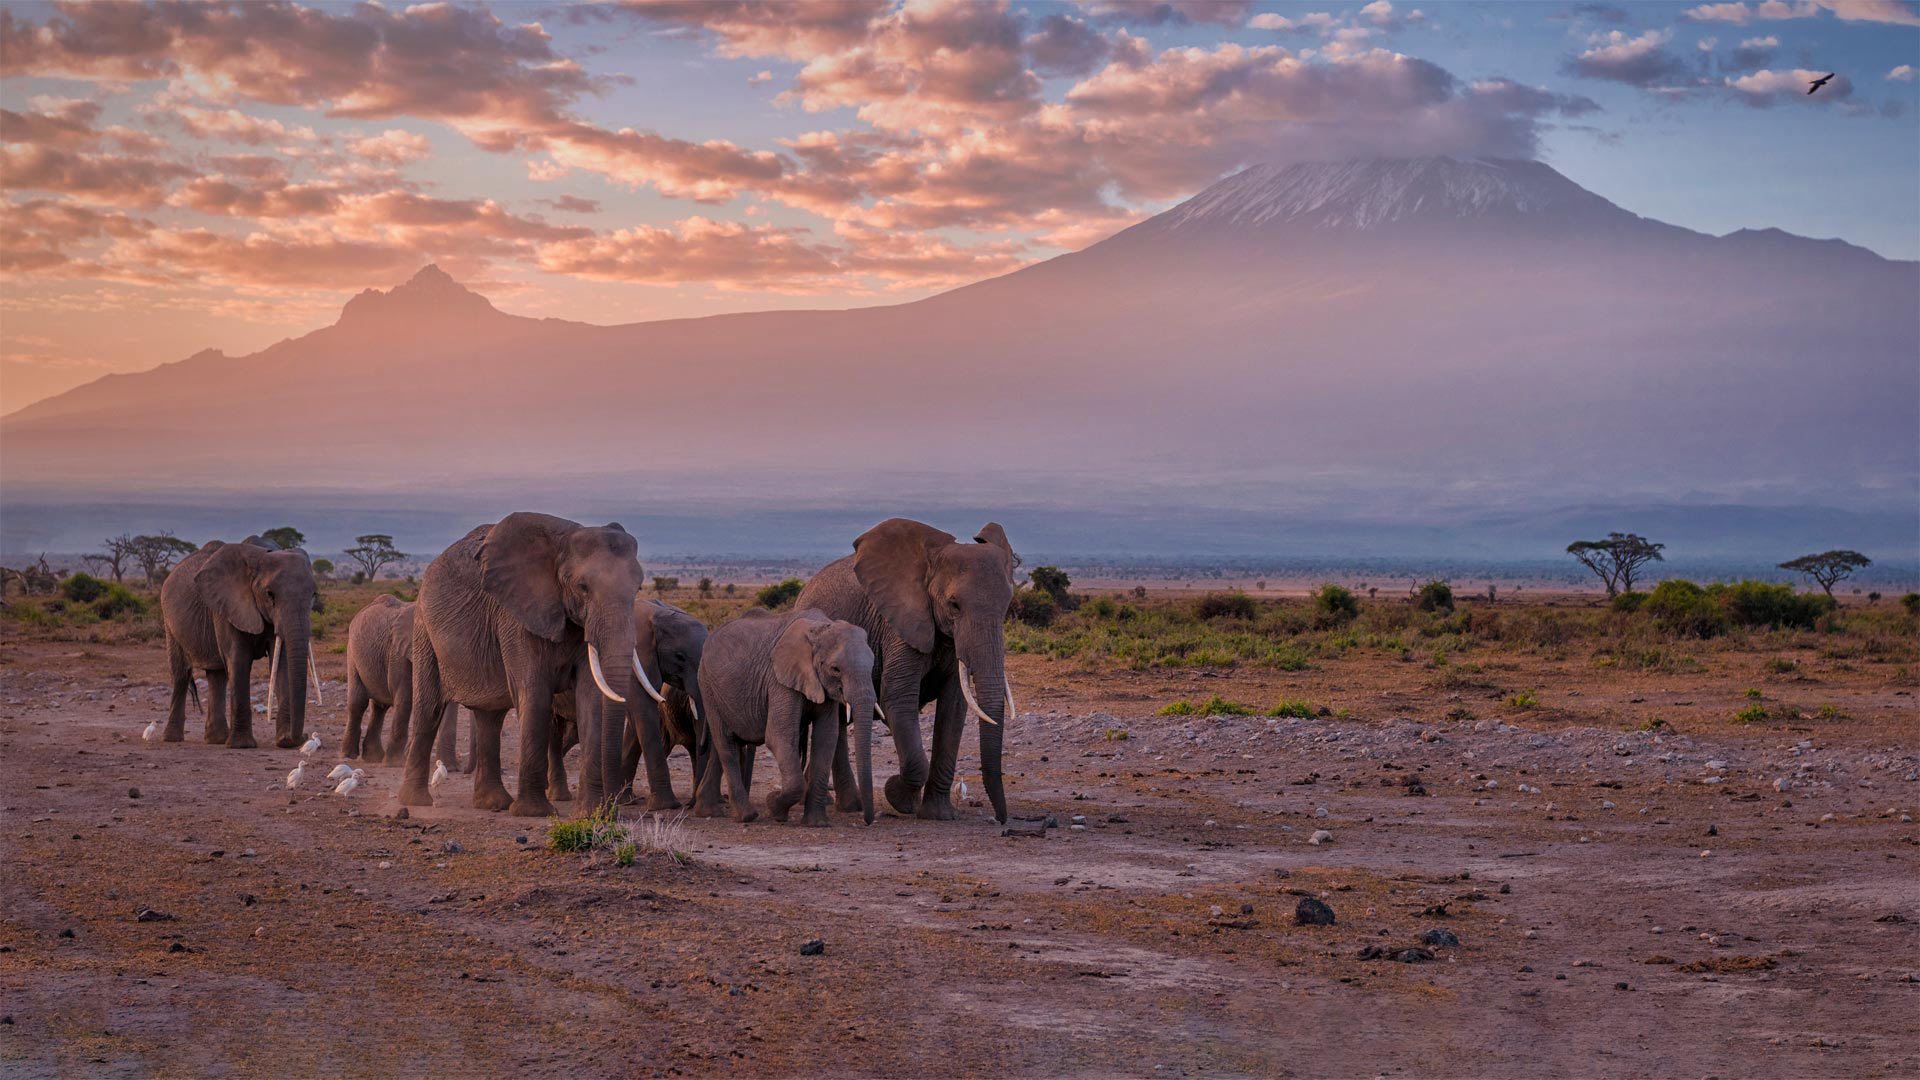 Elephants near Mount Kilimanjaro